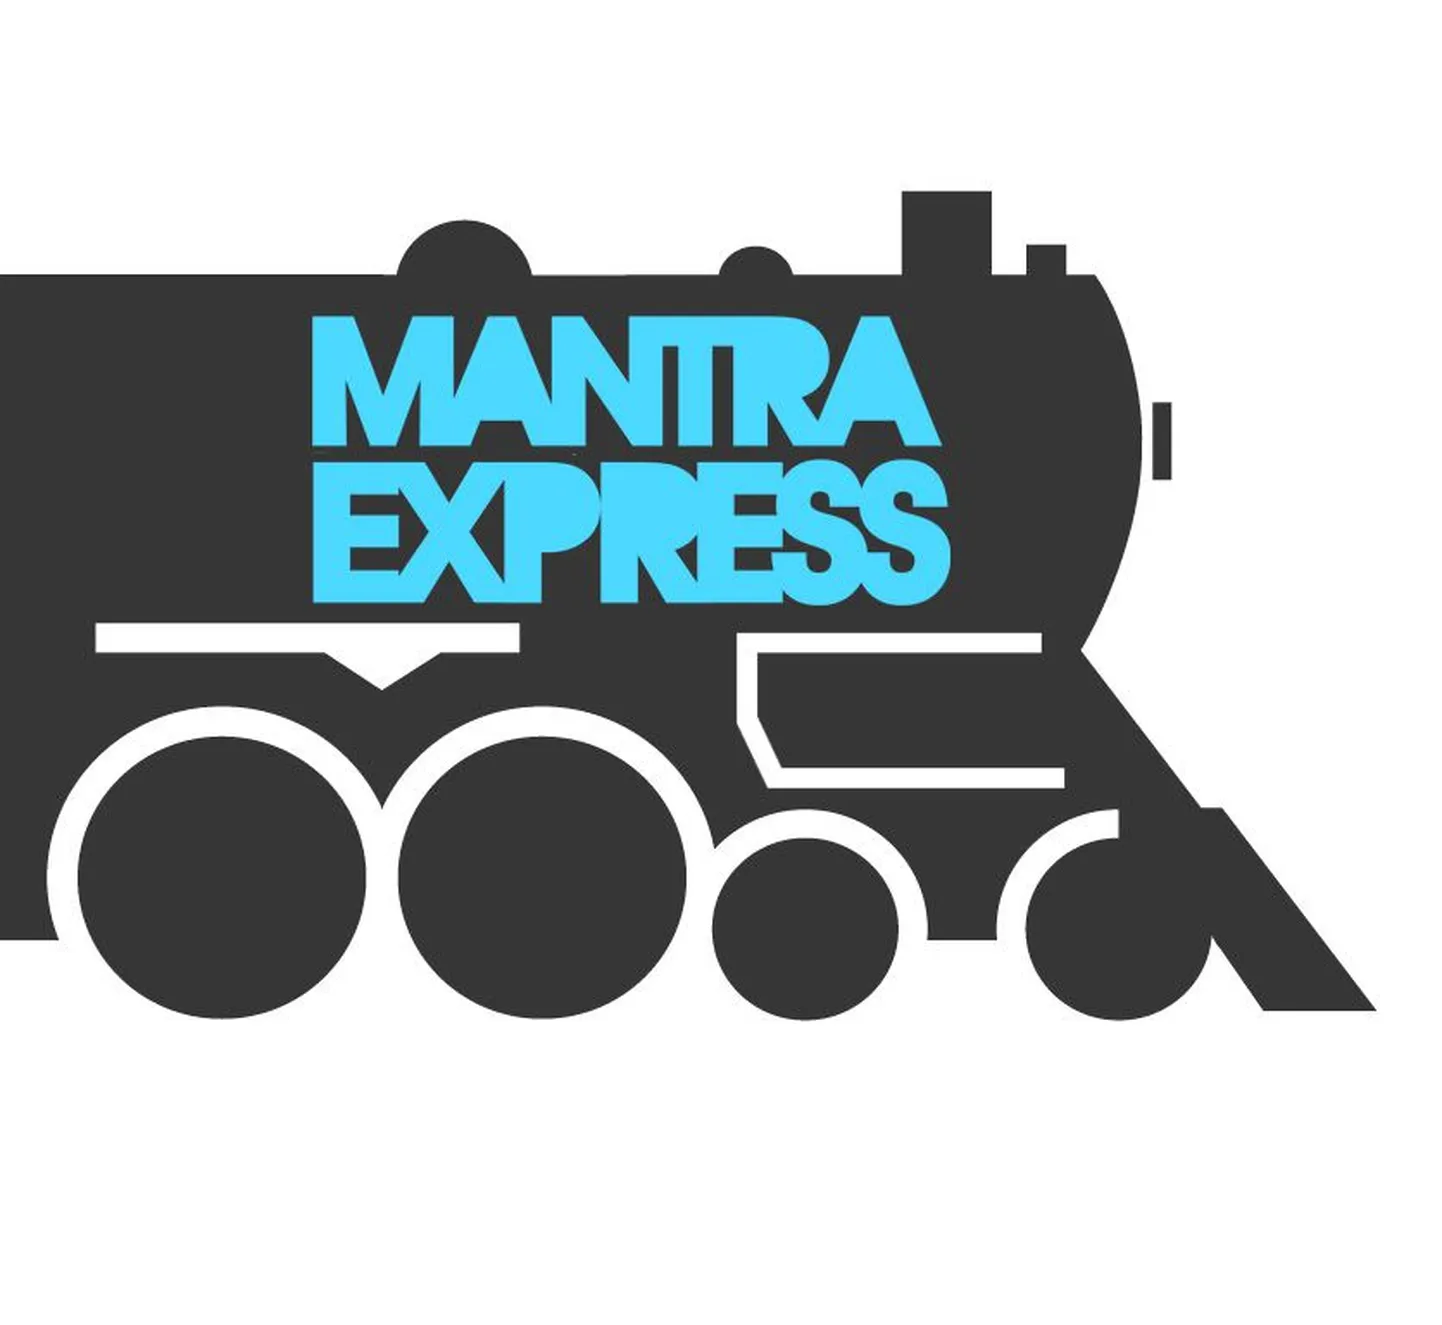 Mantra Express